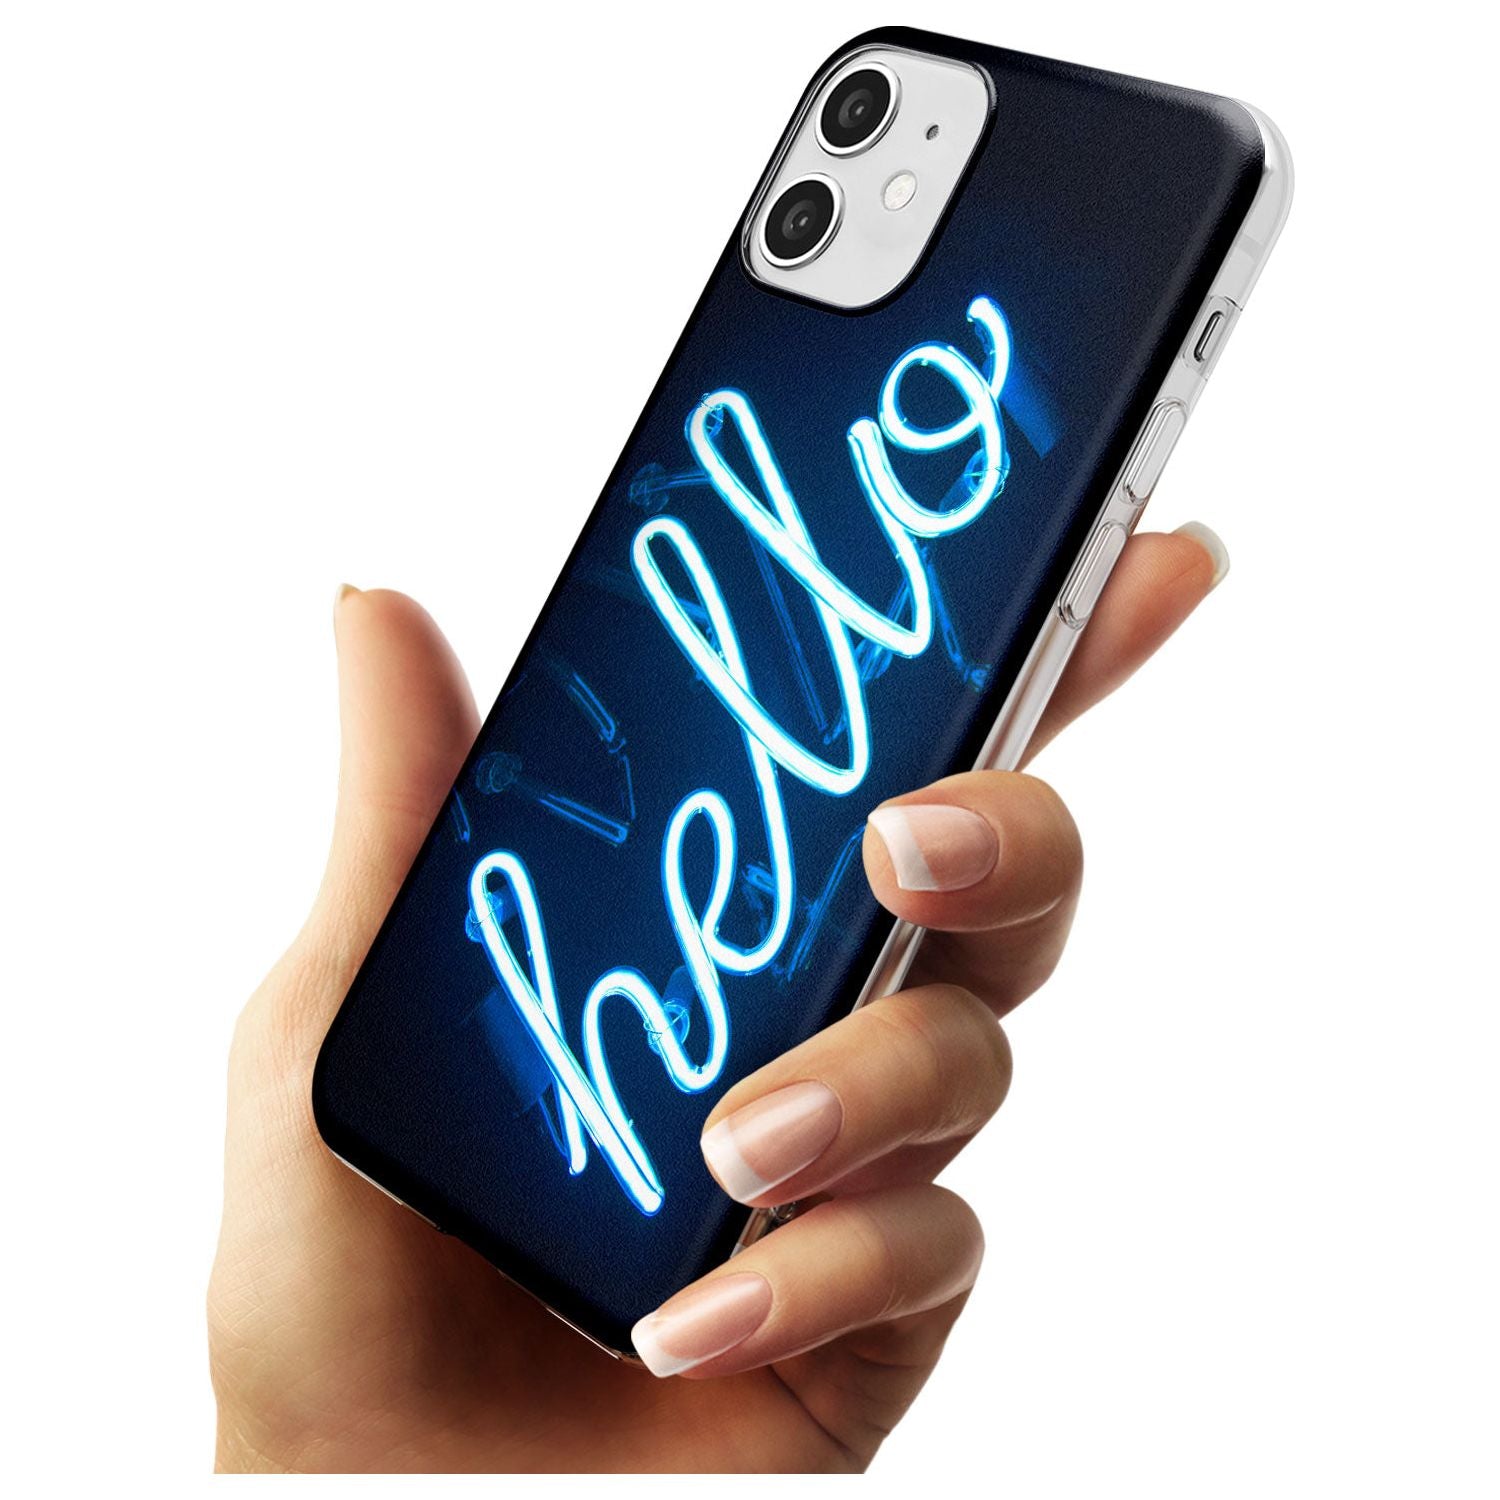 "Hello" Blue Cursive Neon Sign Slim TPU Phone Case for iPhone 11